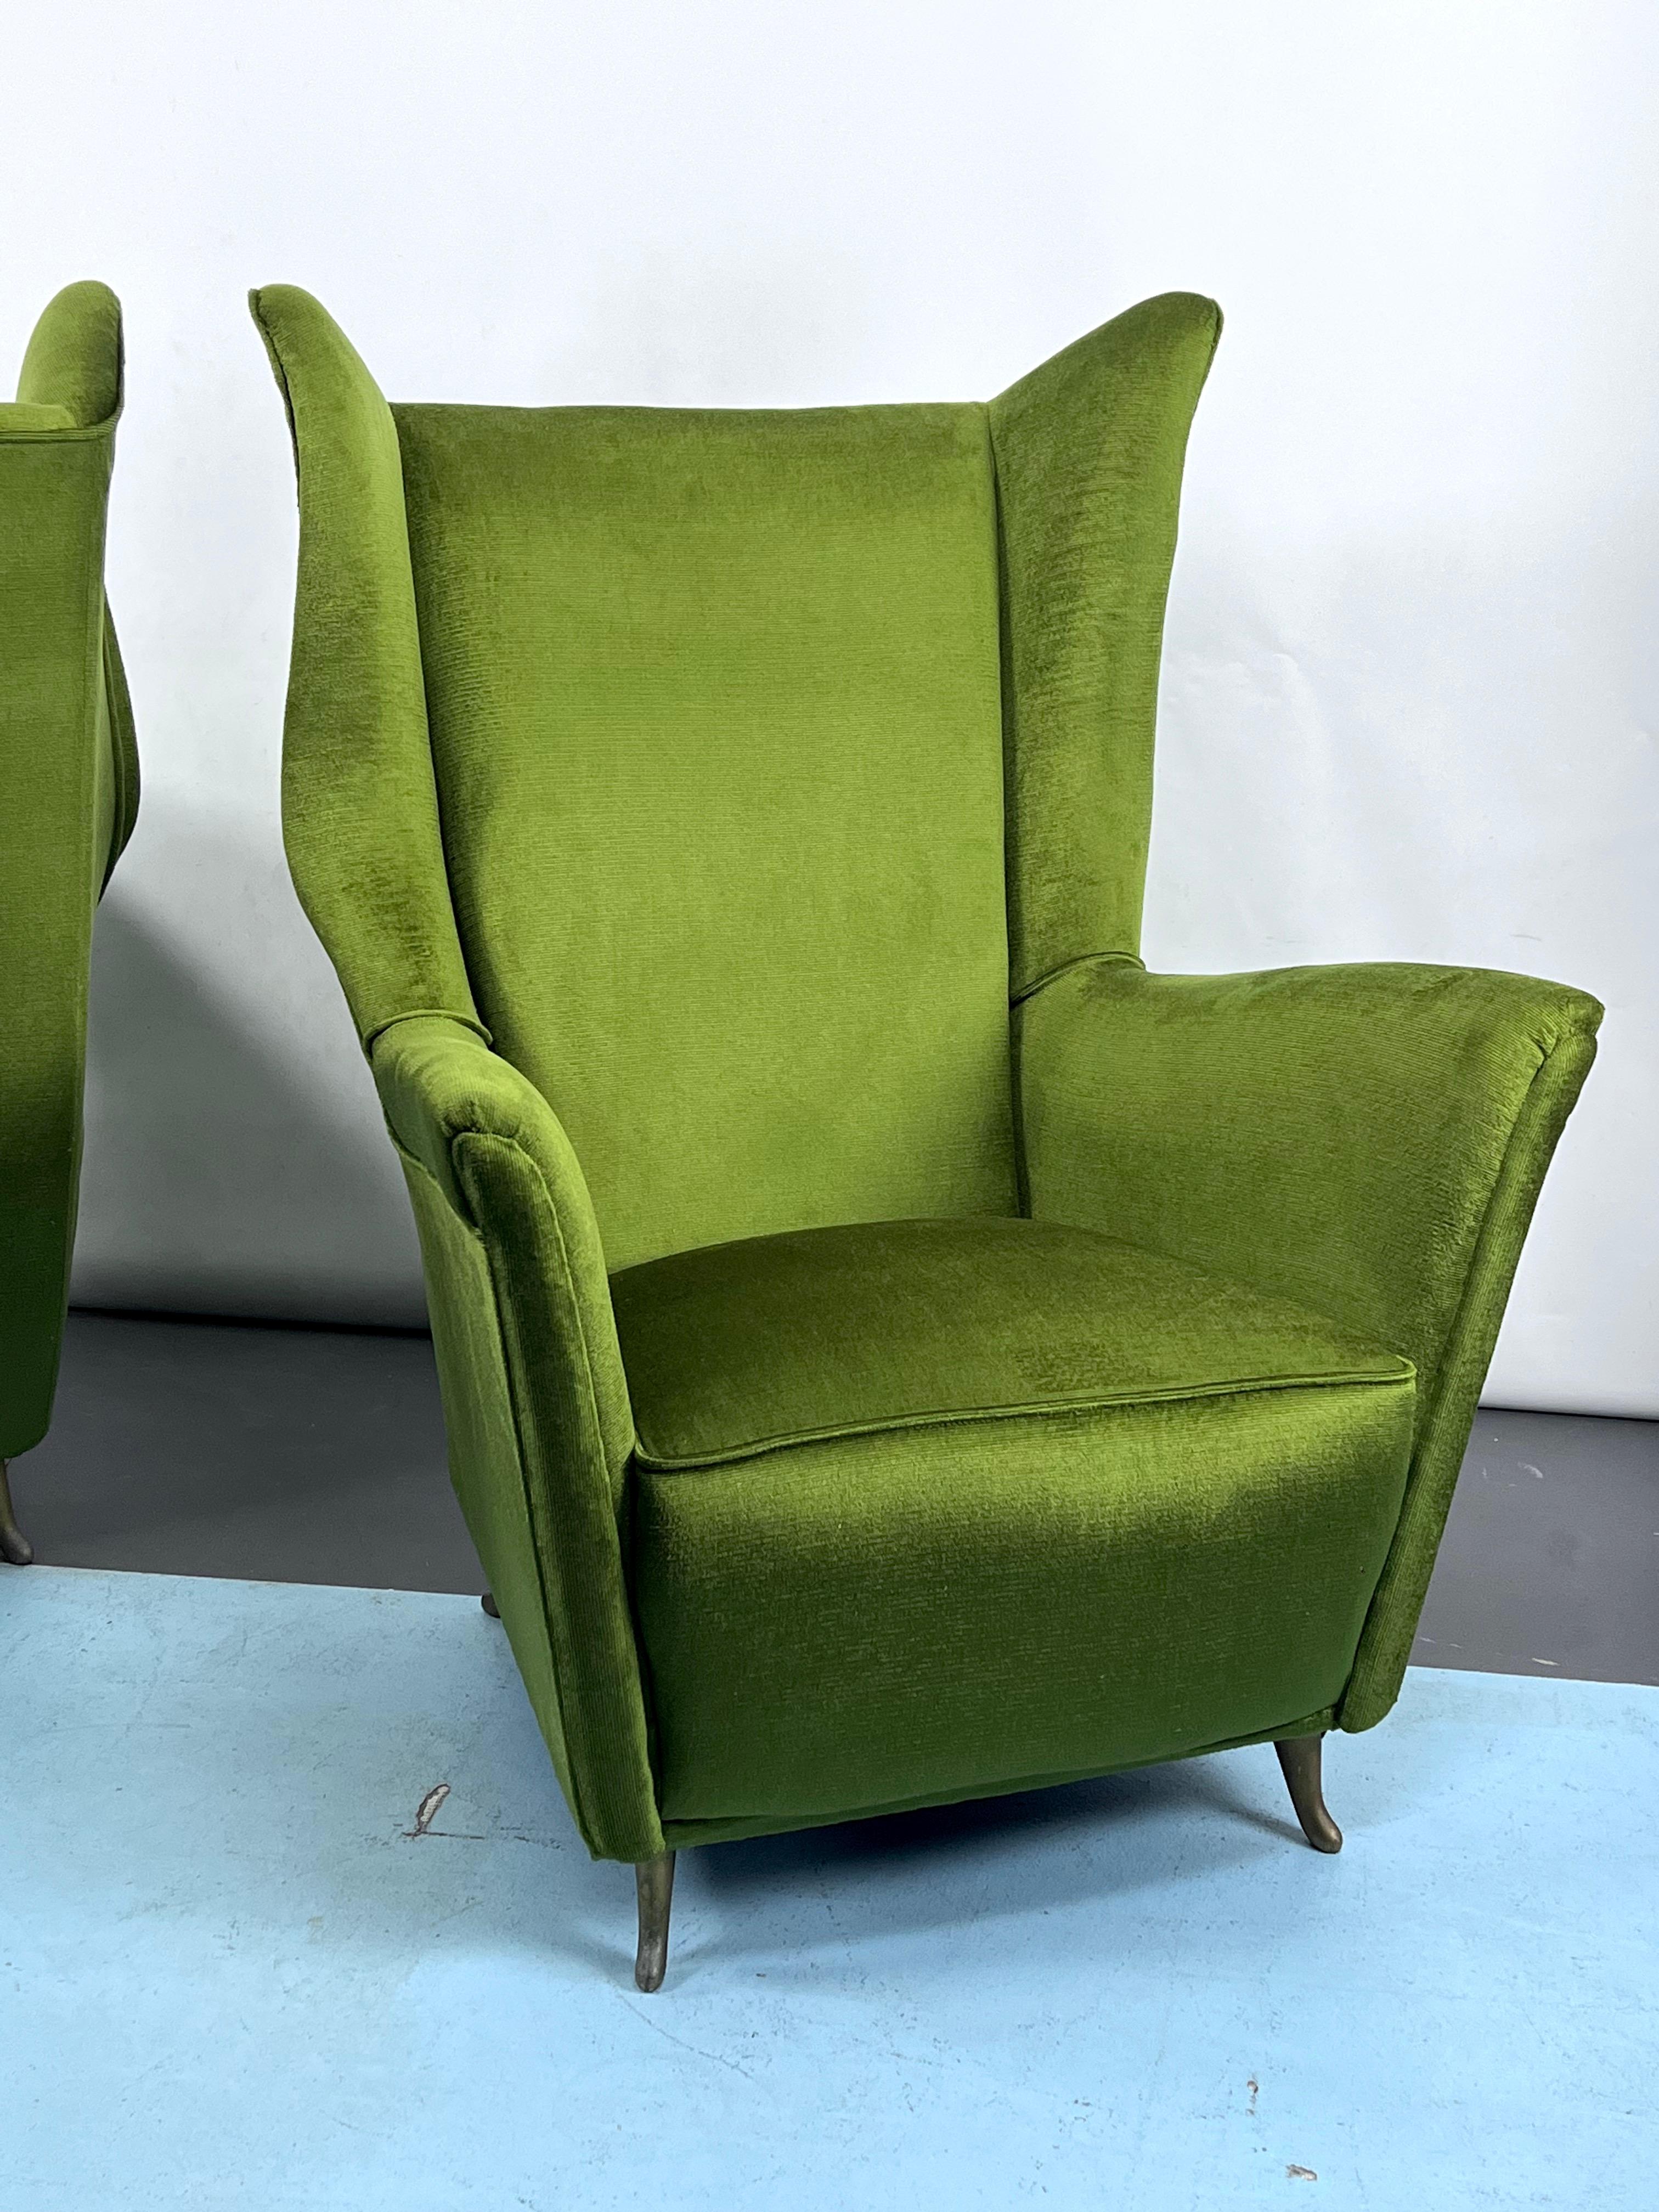 Rare Midcentury Italian Green Velvet ISA Armchairs Attributable to Gio Ponti For Sale 5